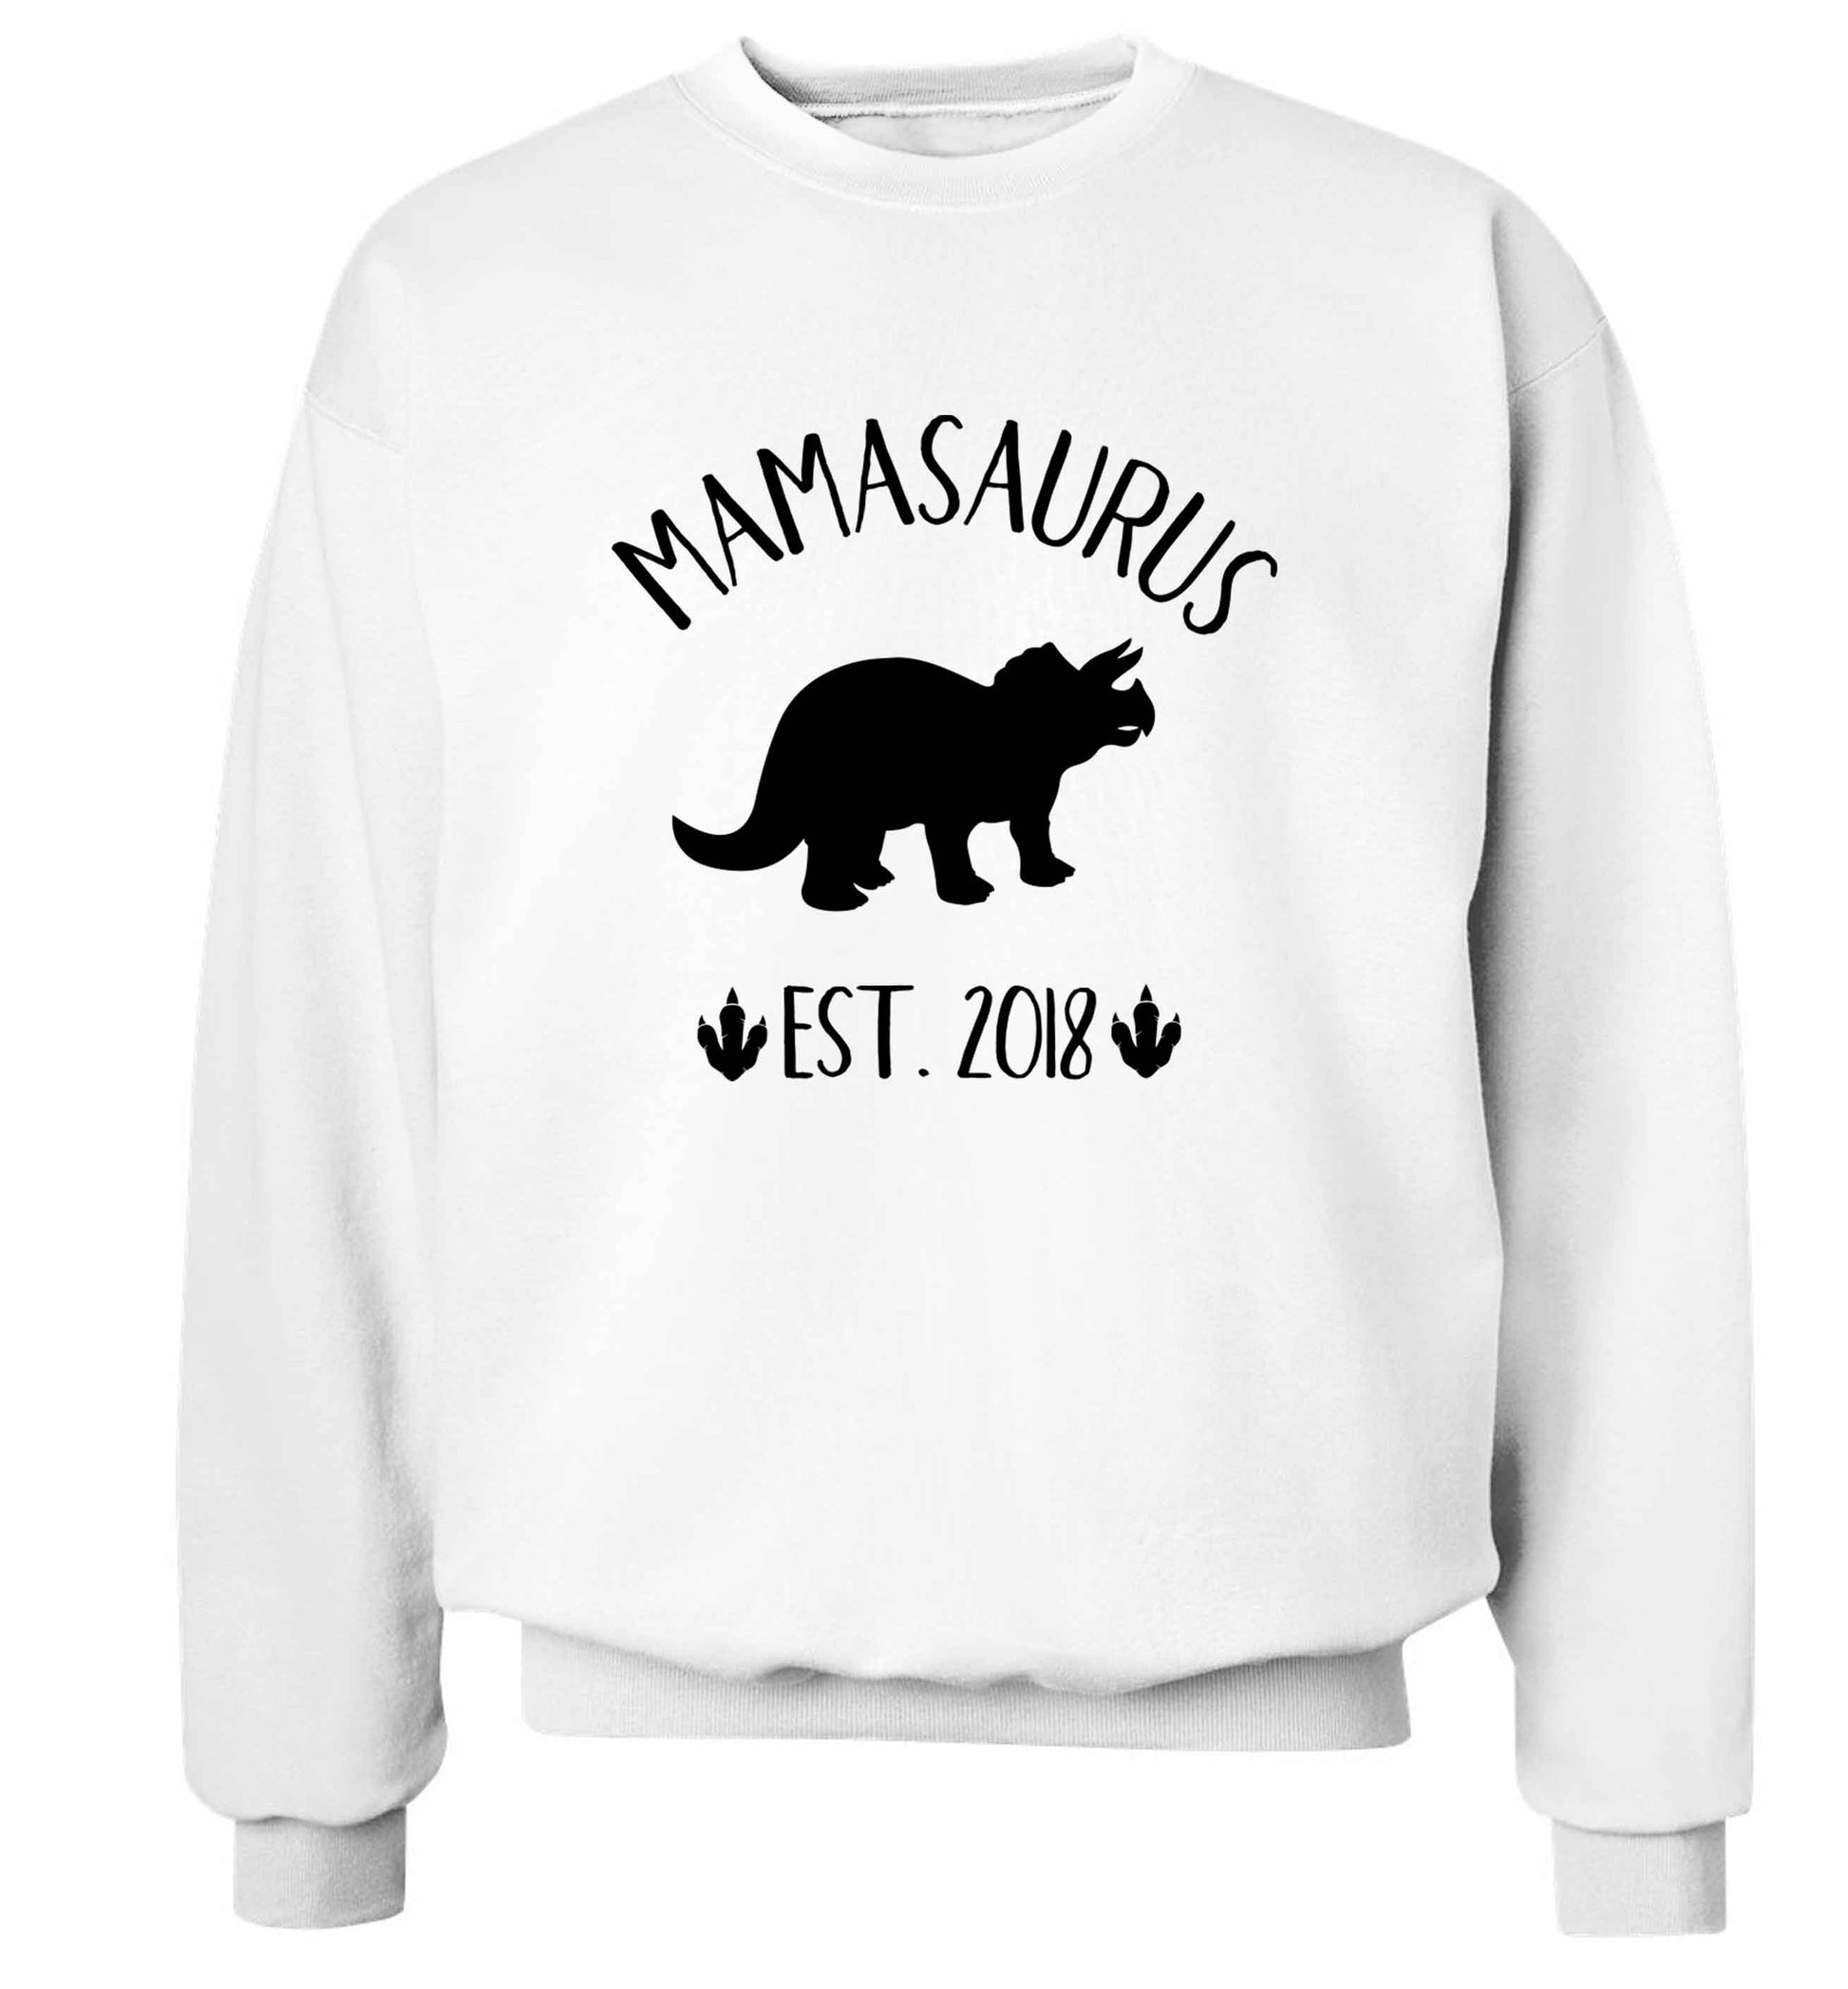 Personalised mamasaurus date adult's unisex white sweater 2XL